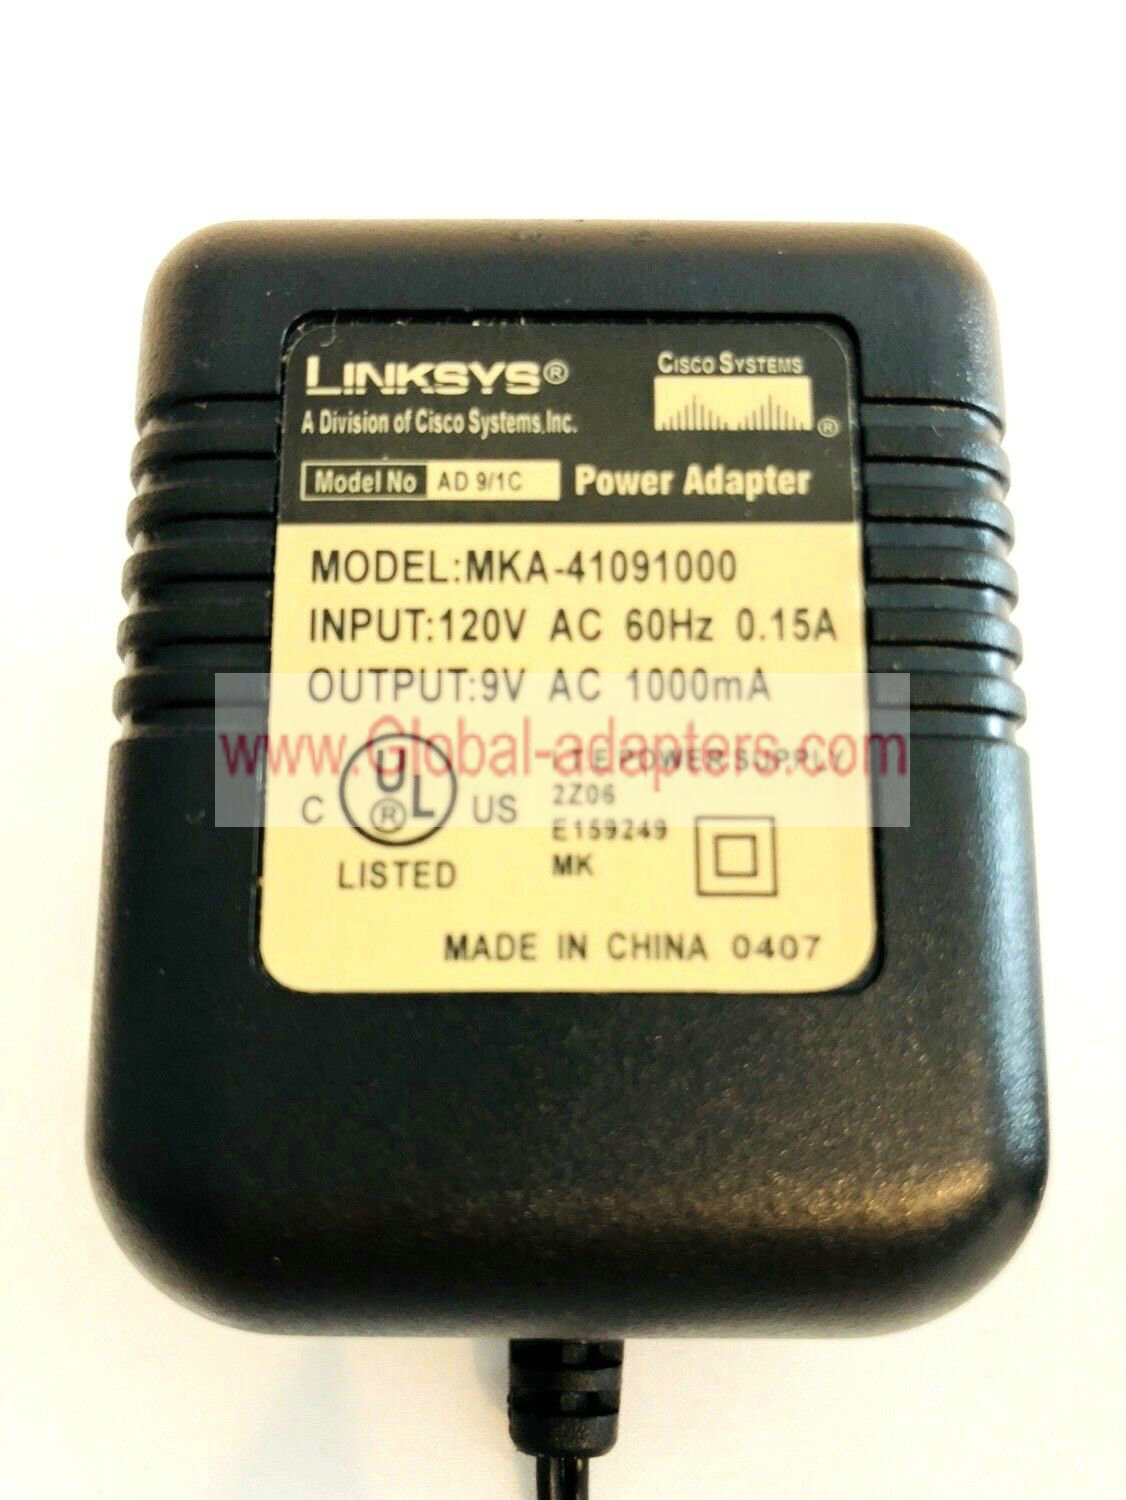 NEW Cisco Linksys MKA-41091000 9VAC 1000mA AD 9/1C AC Adapter Power Supply - Click Image to Close